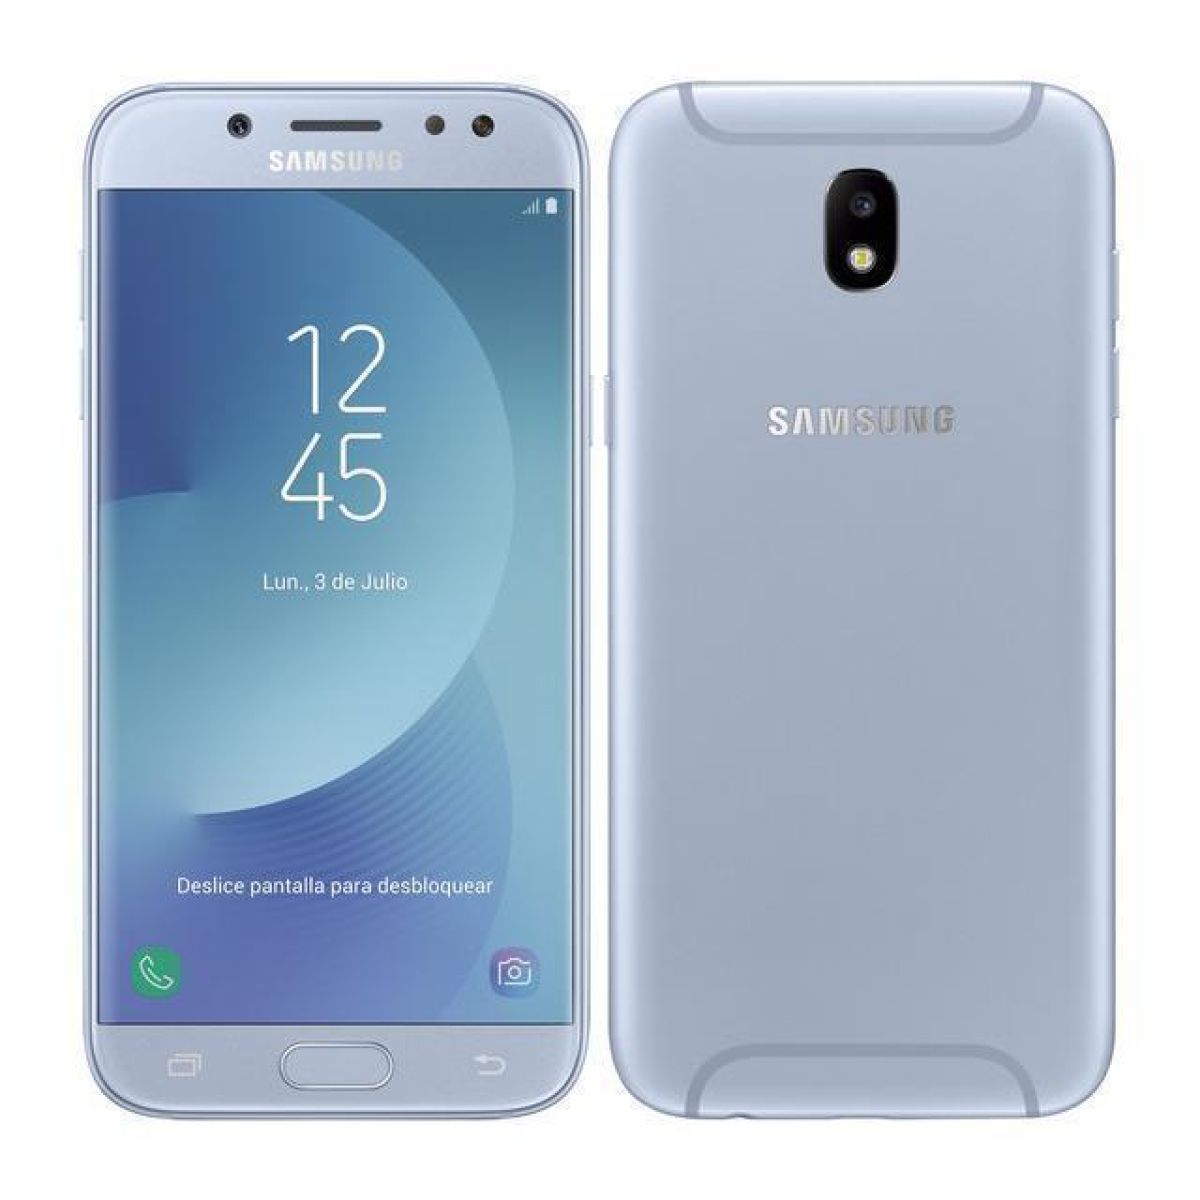 Samsung Galaxy J5 2017 16 Go Bleu Débloqué